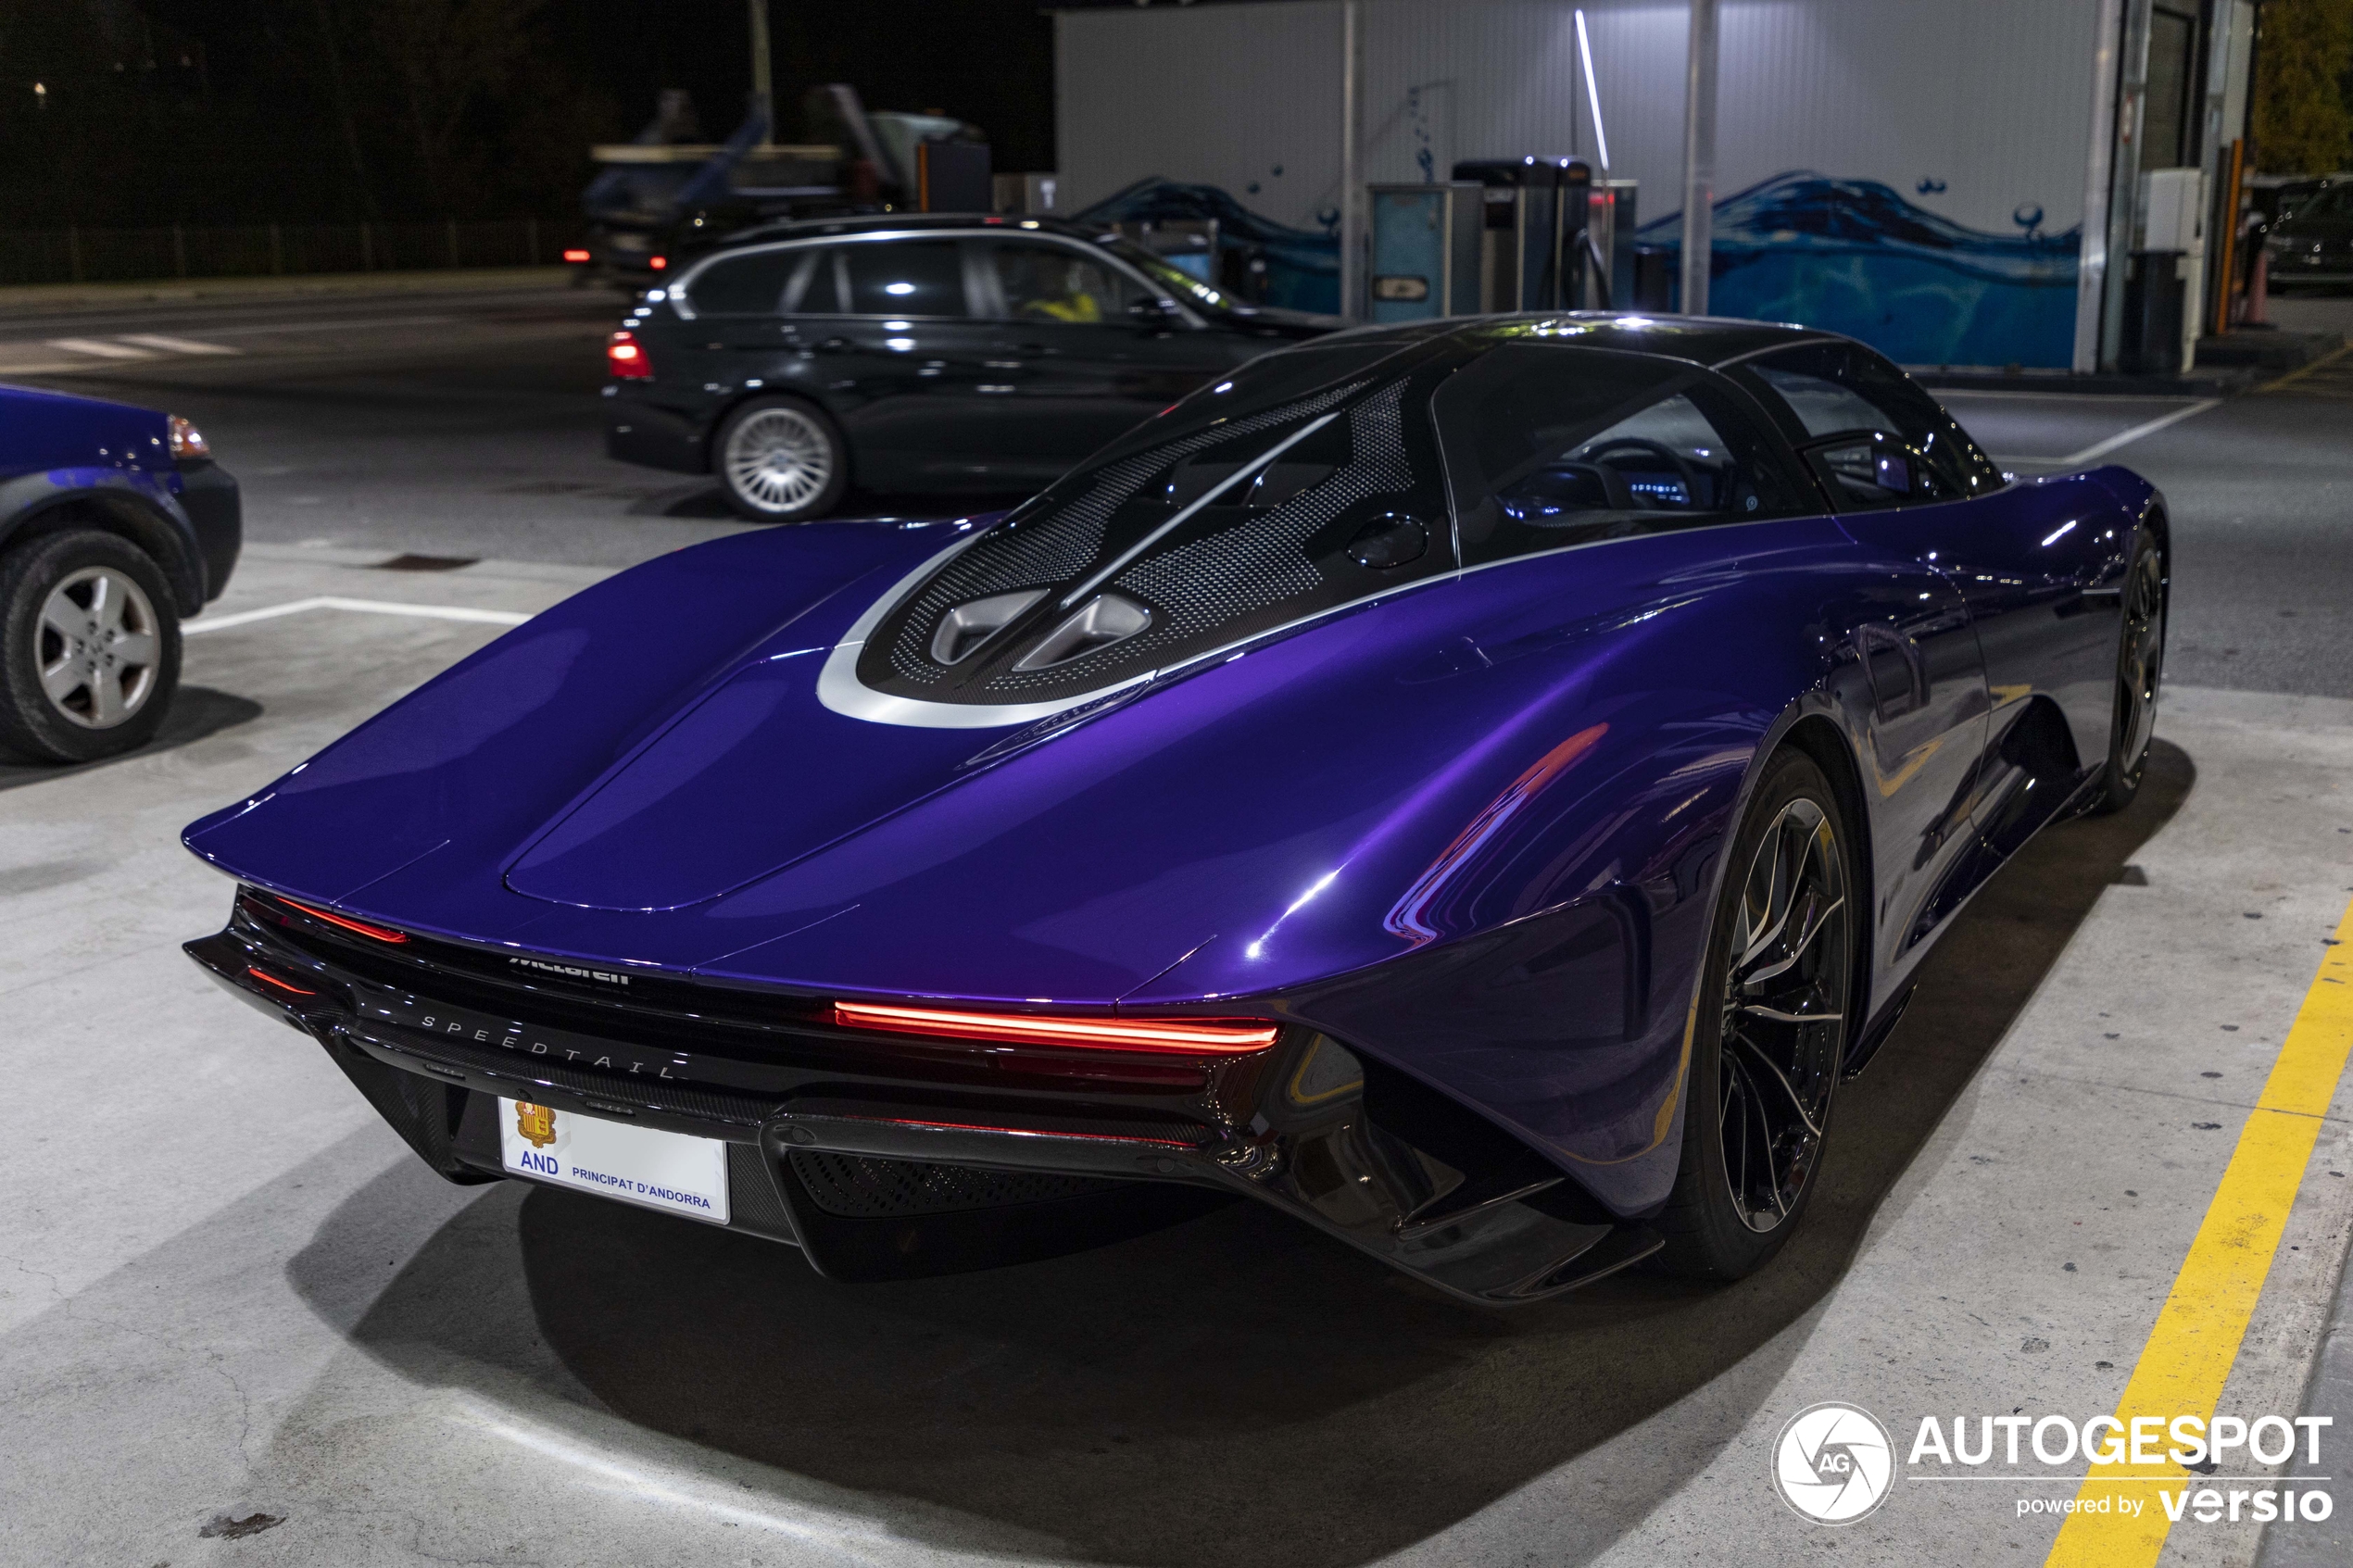 A purple Speedtail shows up in Andorra